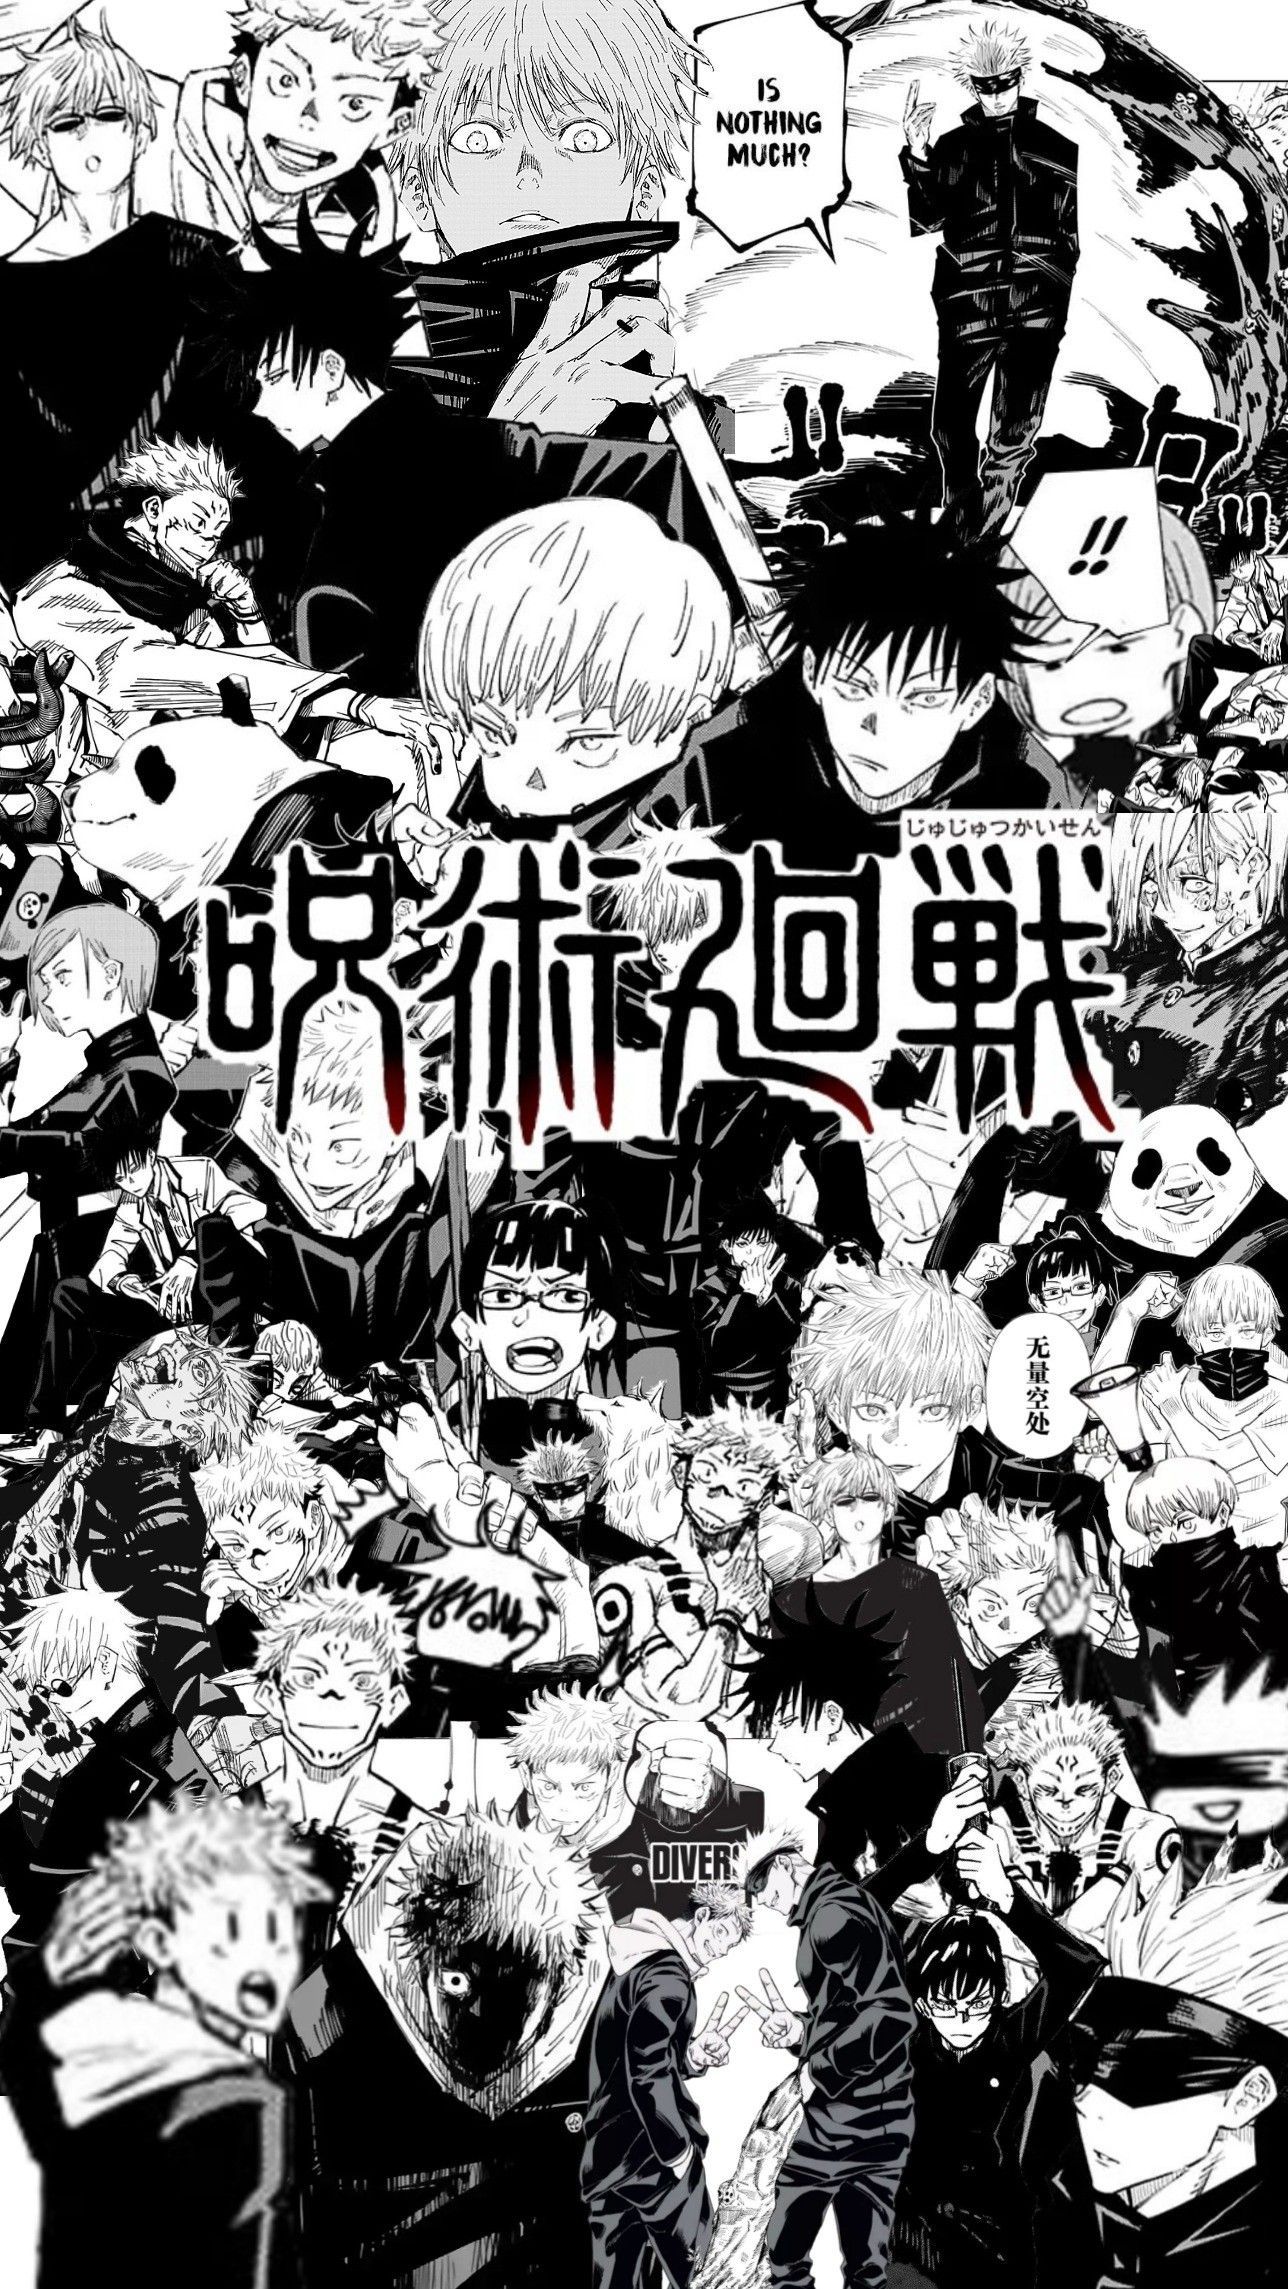 Jujutsu Kaisen Manga wallpaper. Mangá wallpaper, Fantasia anime, Animes wallpaper